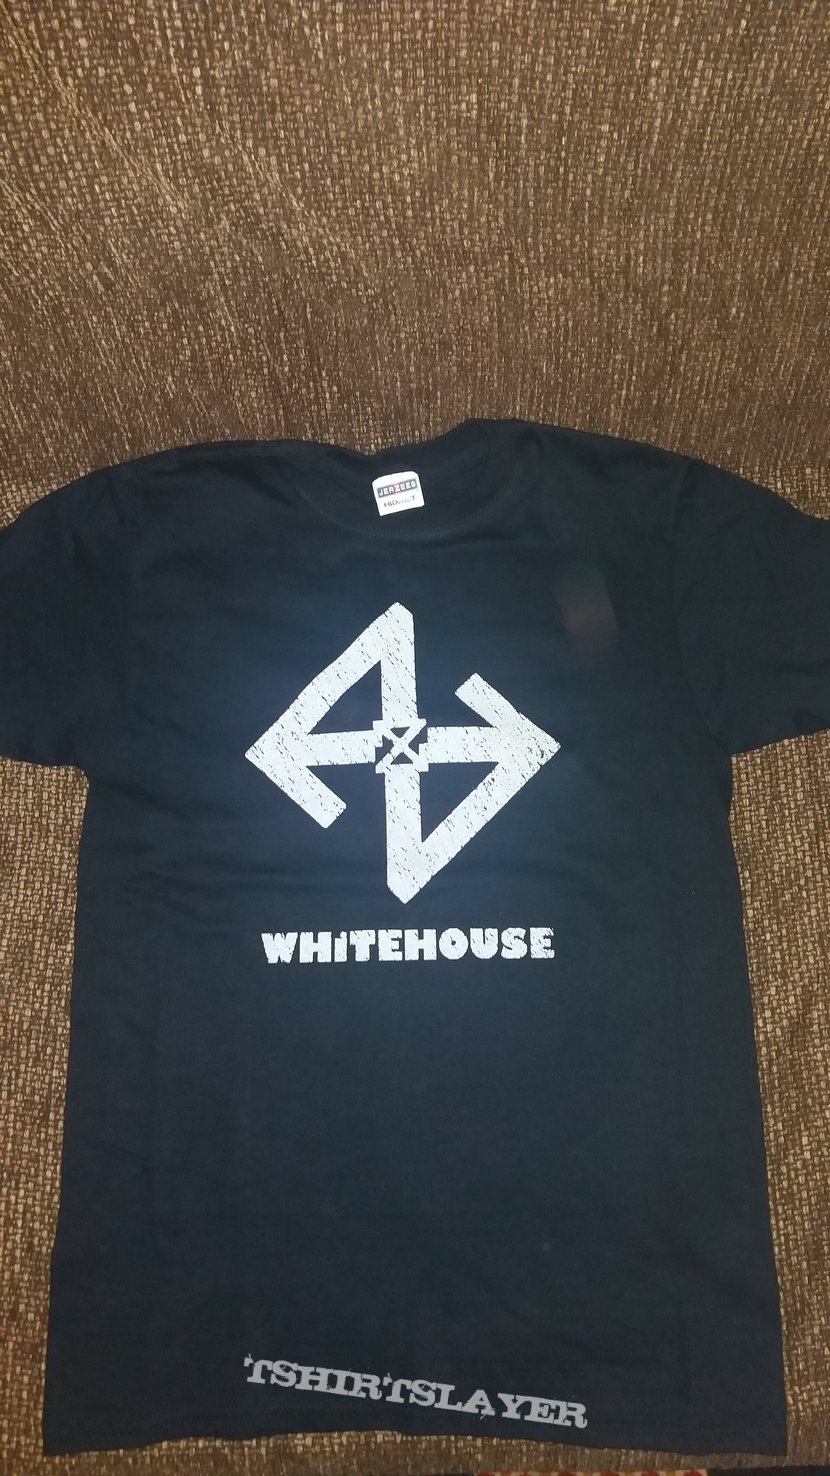 Whitehouse tshirt | TShirtSlayer TShirt and BattleJacket Gallery